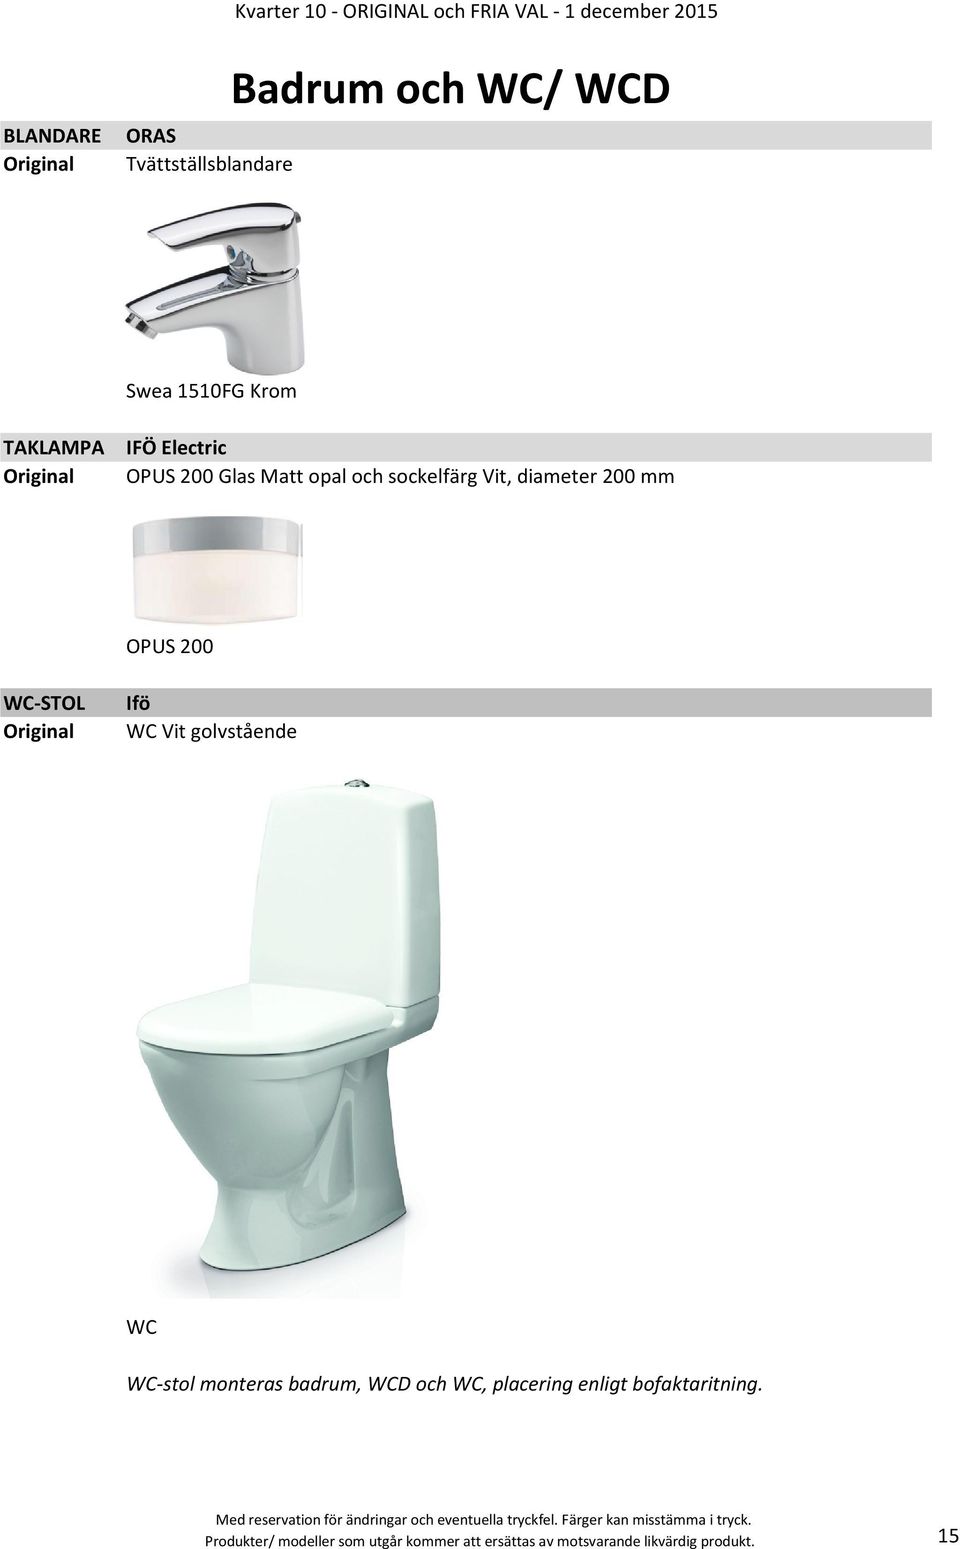 200 mm OPUS 200 WC-STOL Ifö WC Vit golvstående WC WC-stol monteras badrum, WCD och WC, placering